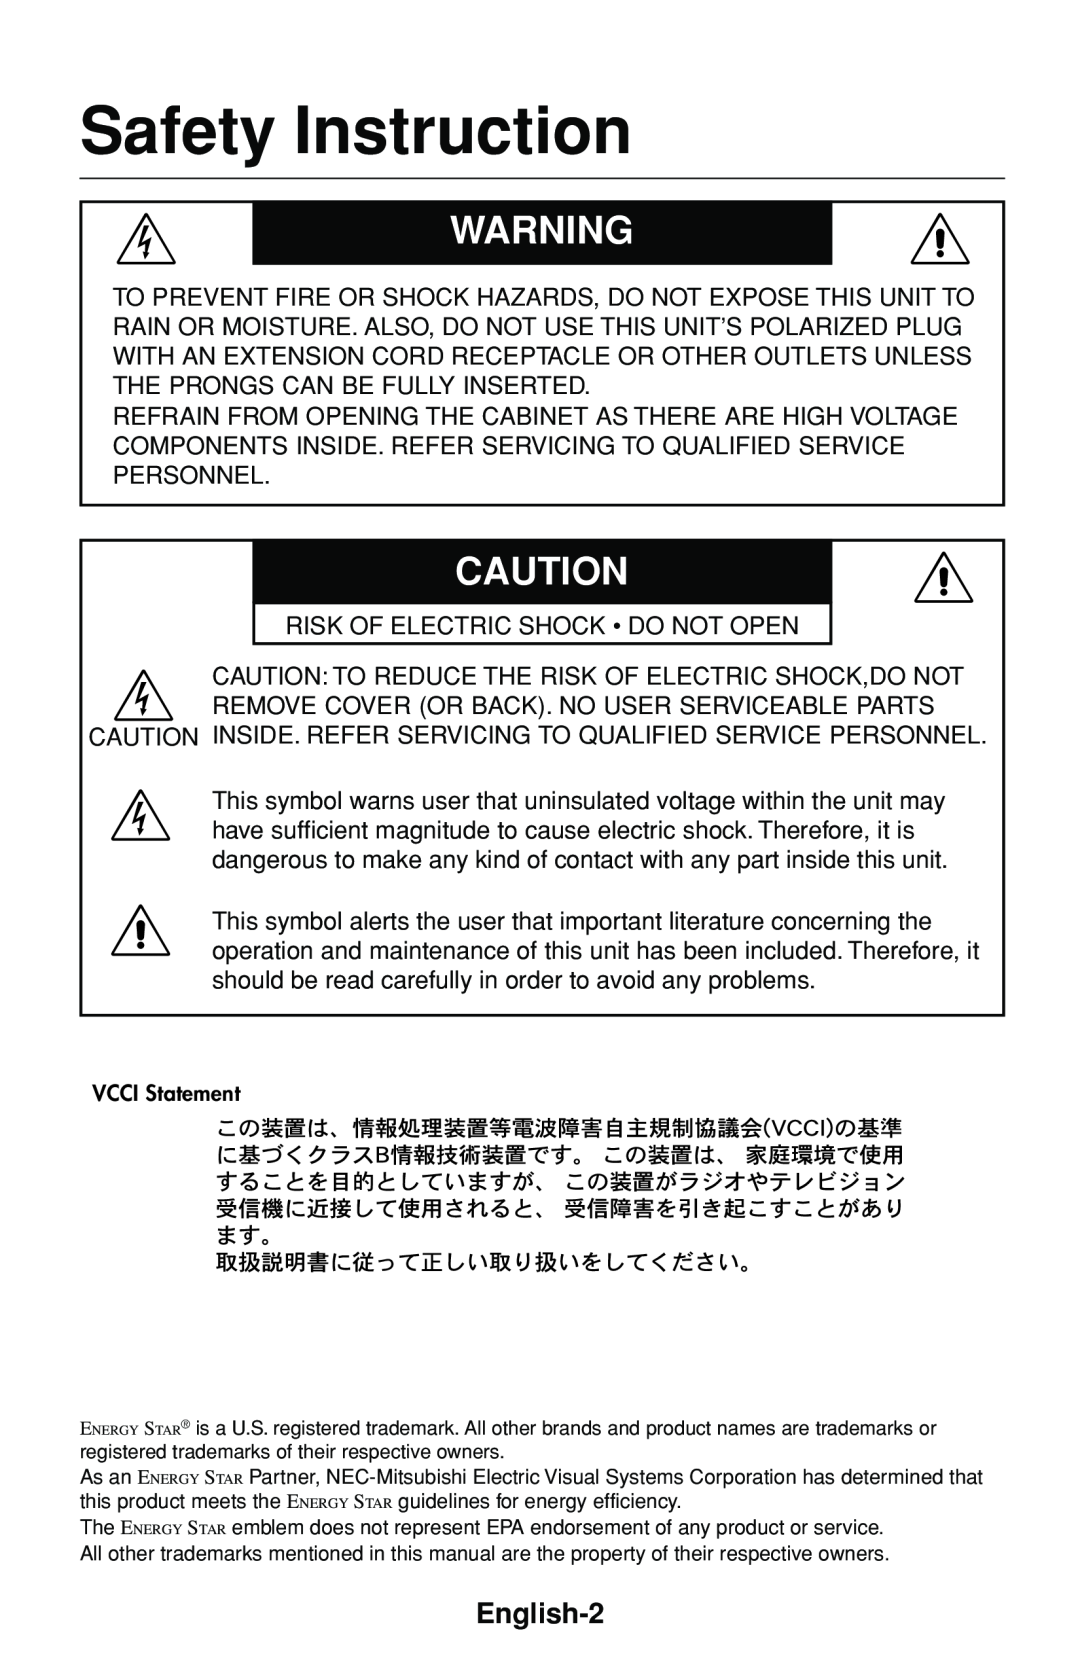 NEC FP1375X user manual Safety Instruction, English-2 